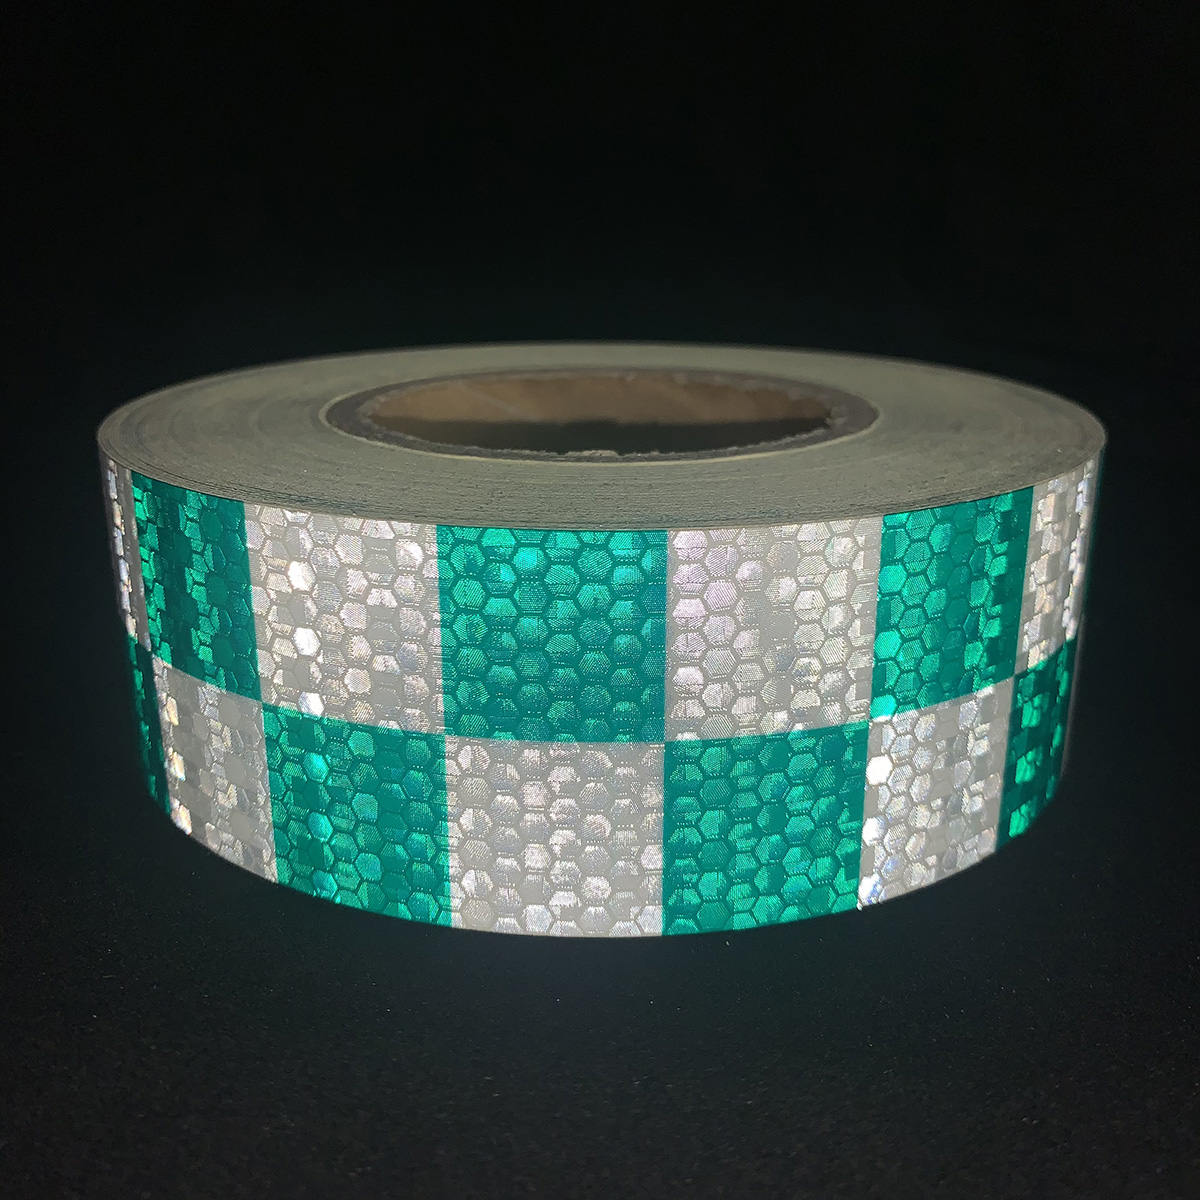 White+Green PVC Honeycombe Checkerboard Retro-Reflective Tape